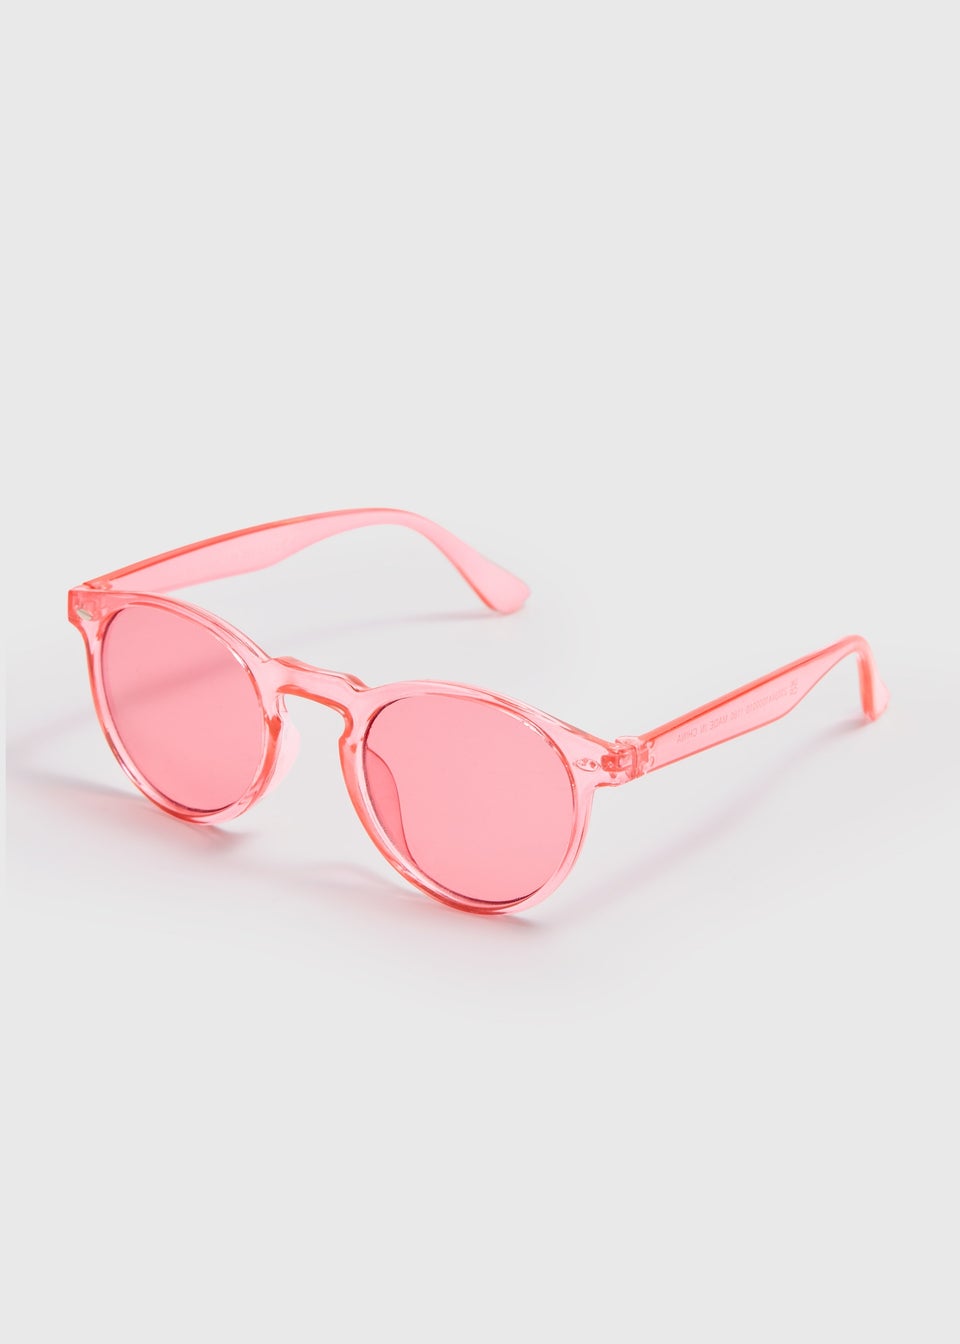 Girls Pink Round Lens Sunglasses